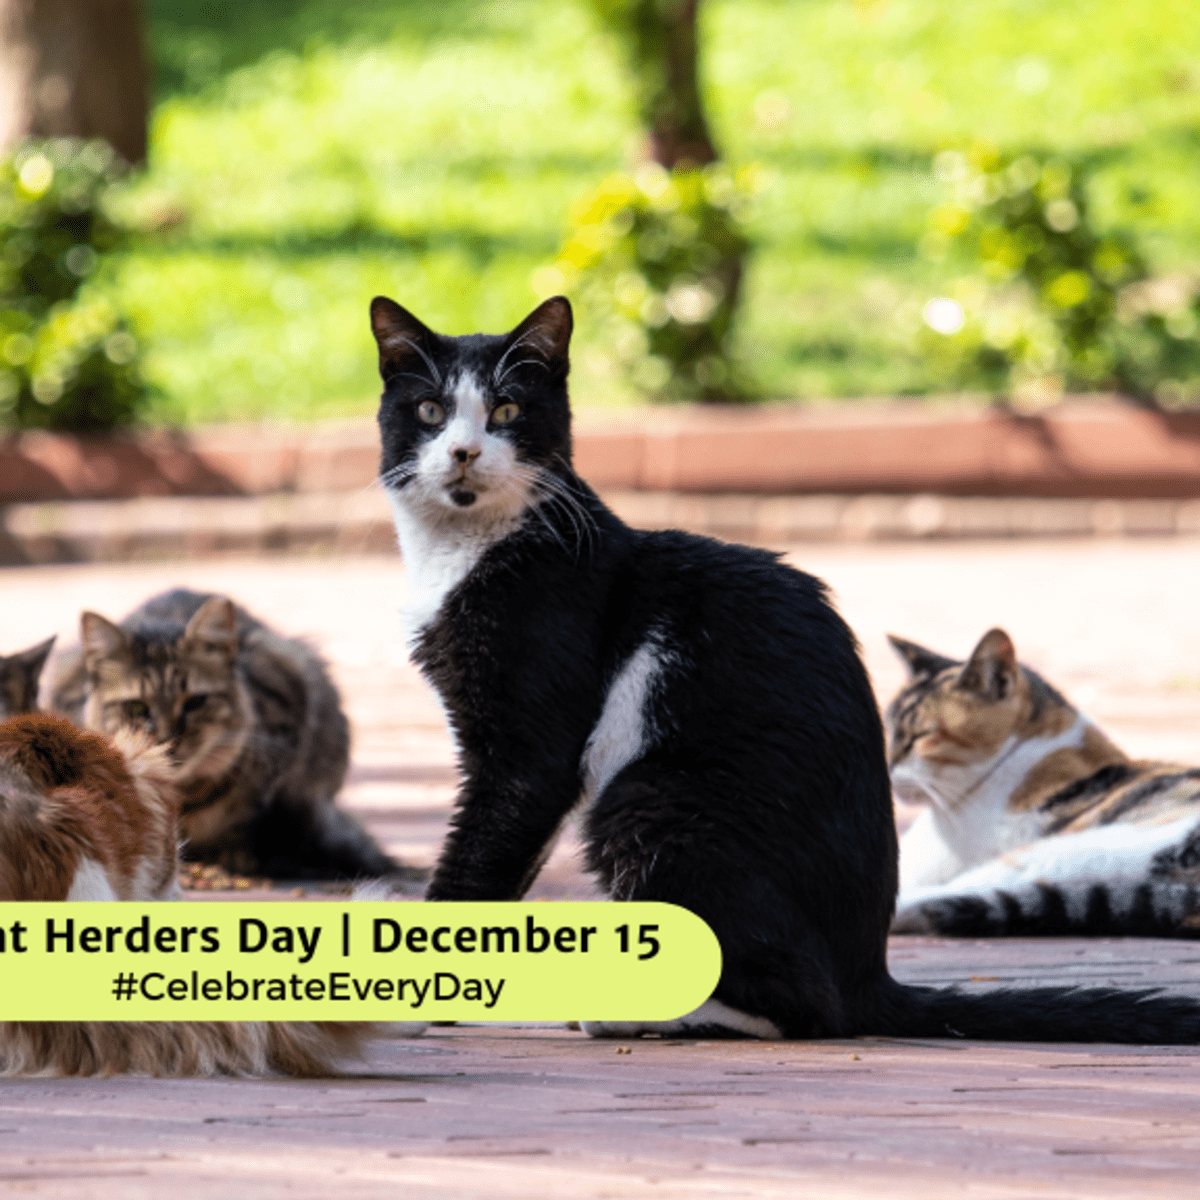 CAT HERDERS DAY - December 15 - National Day Calendar